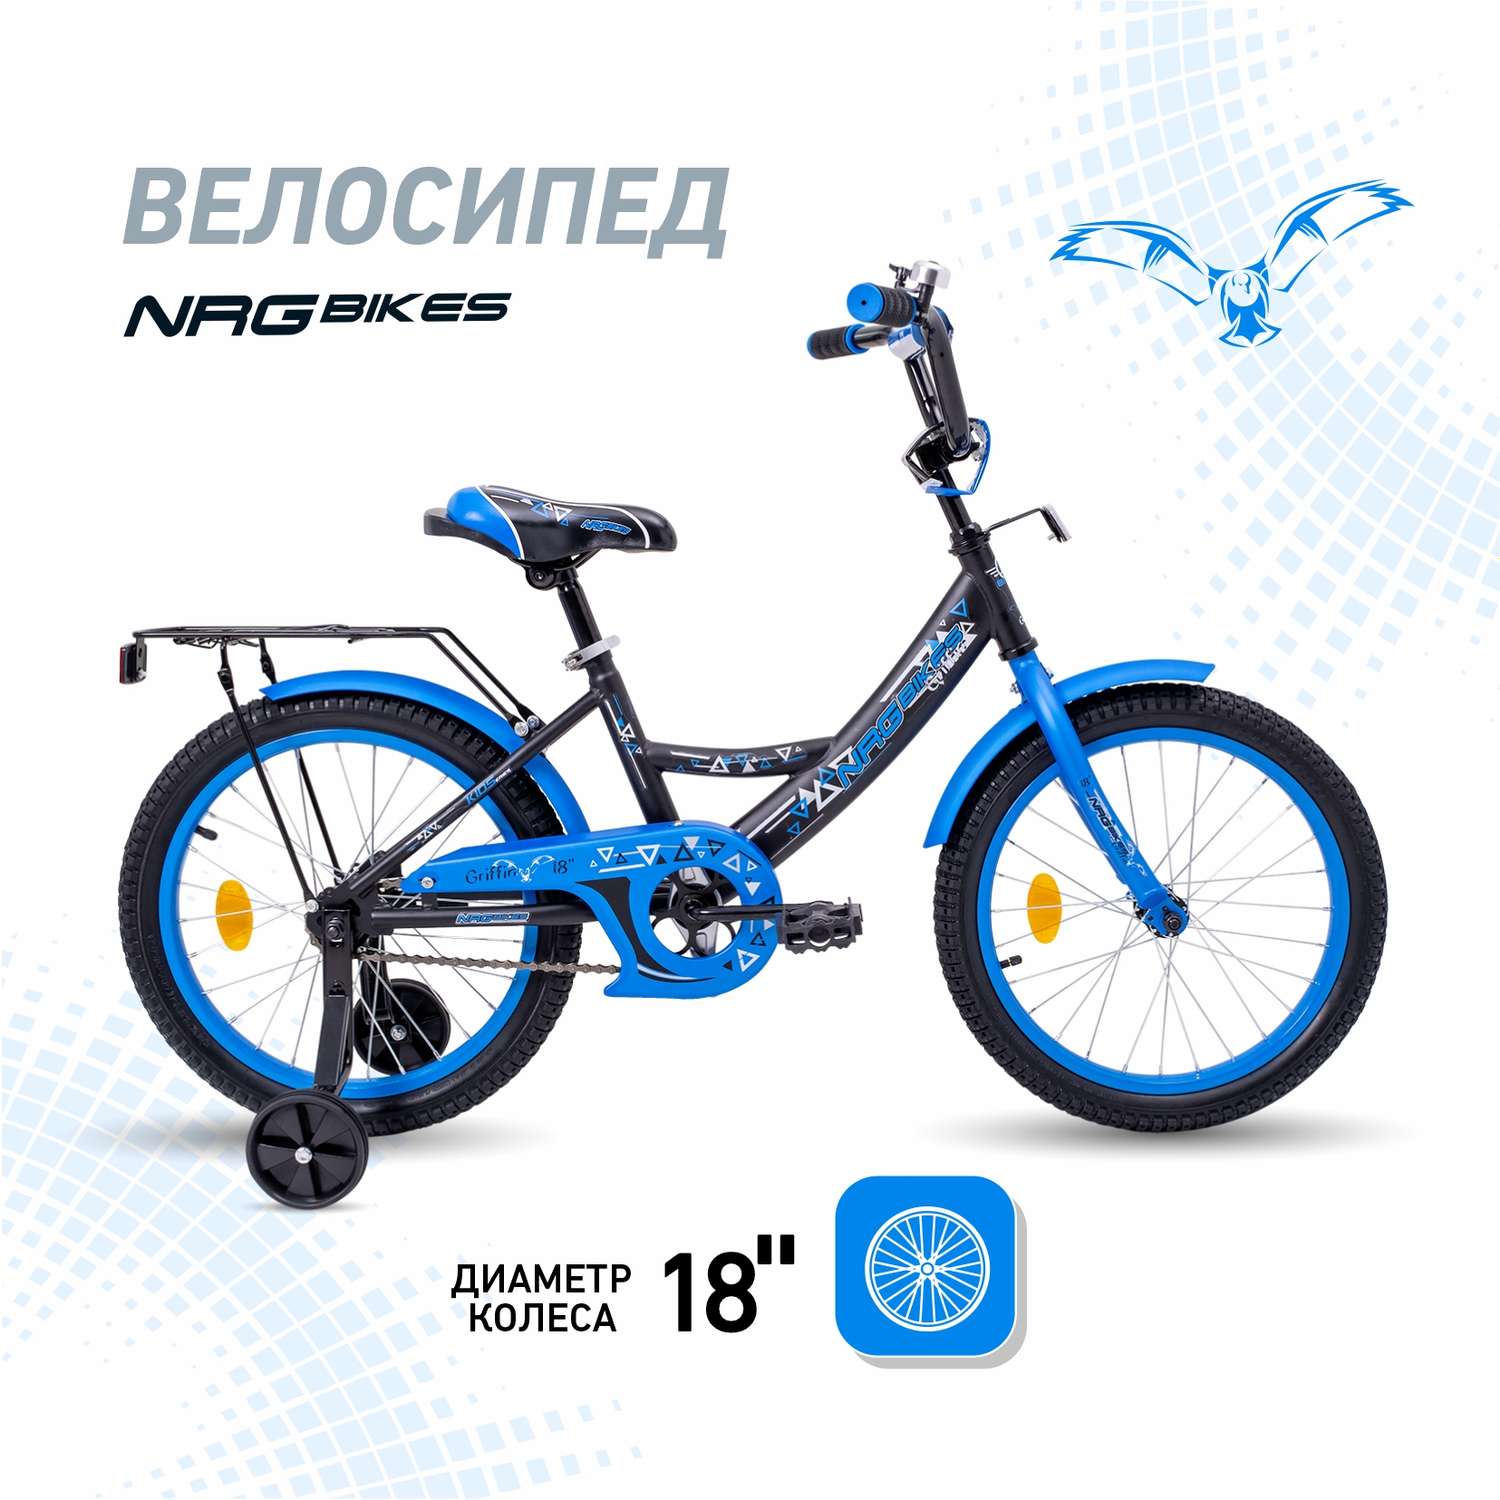 Велосипед NRG BIKES GRIFFIN black-blue - фото 1